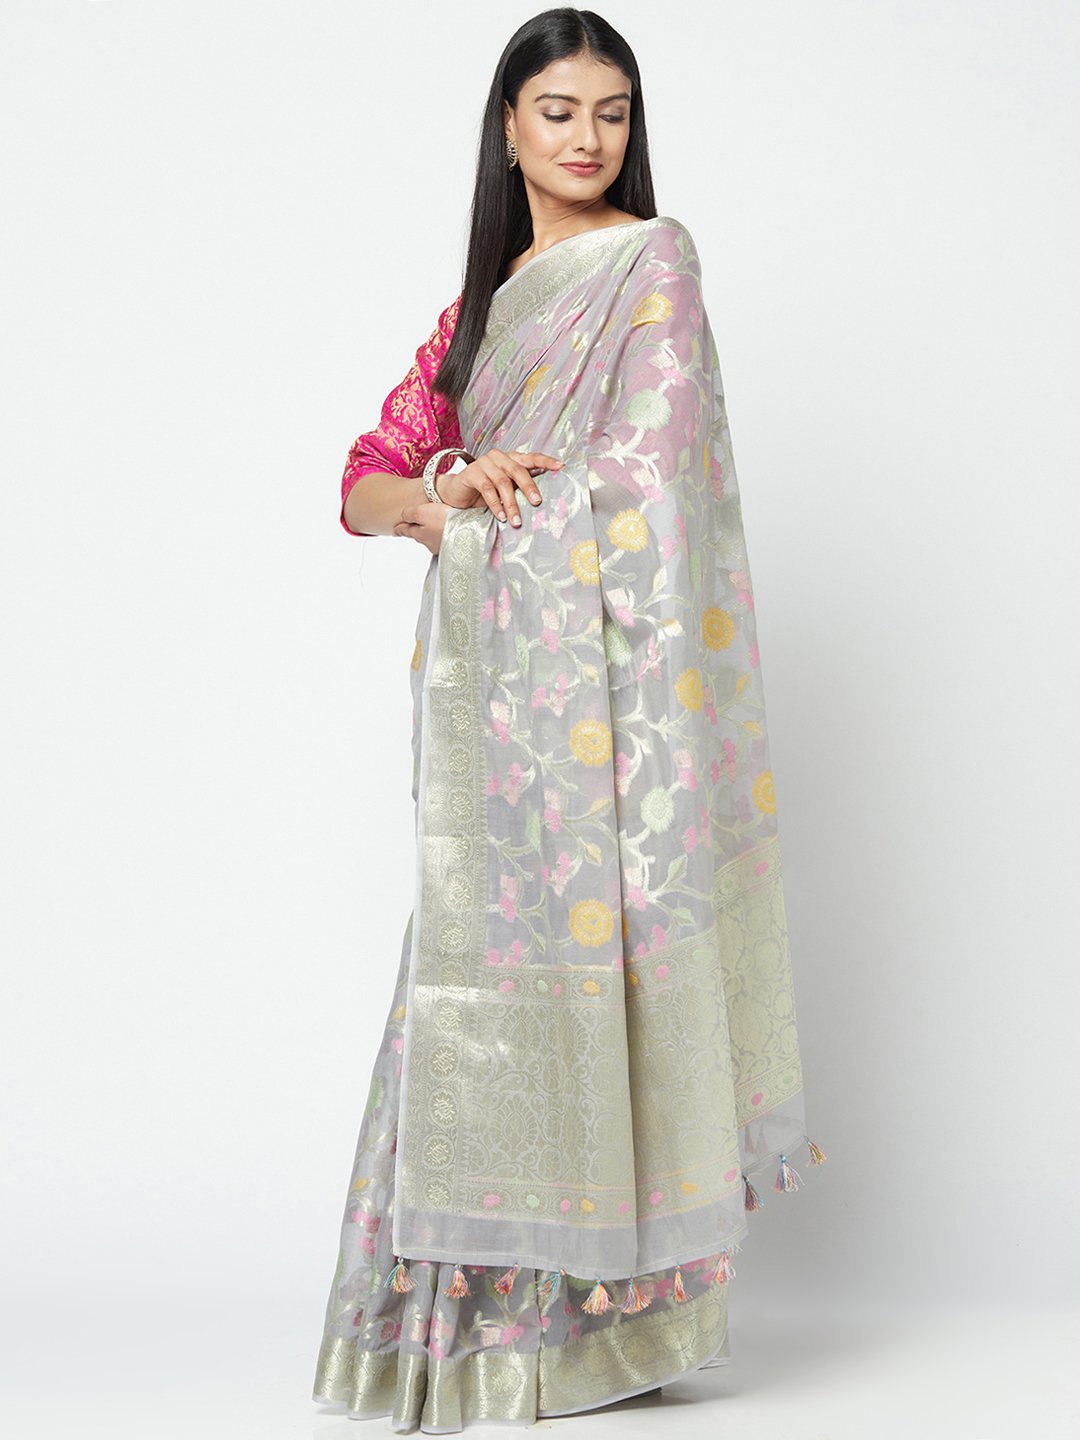 Handloom Saree In Silver Color For Party Wear